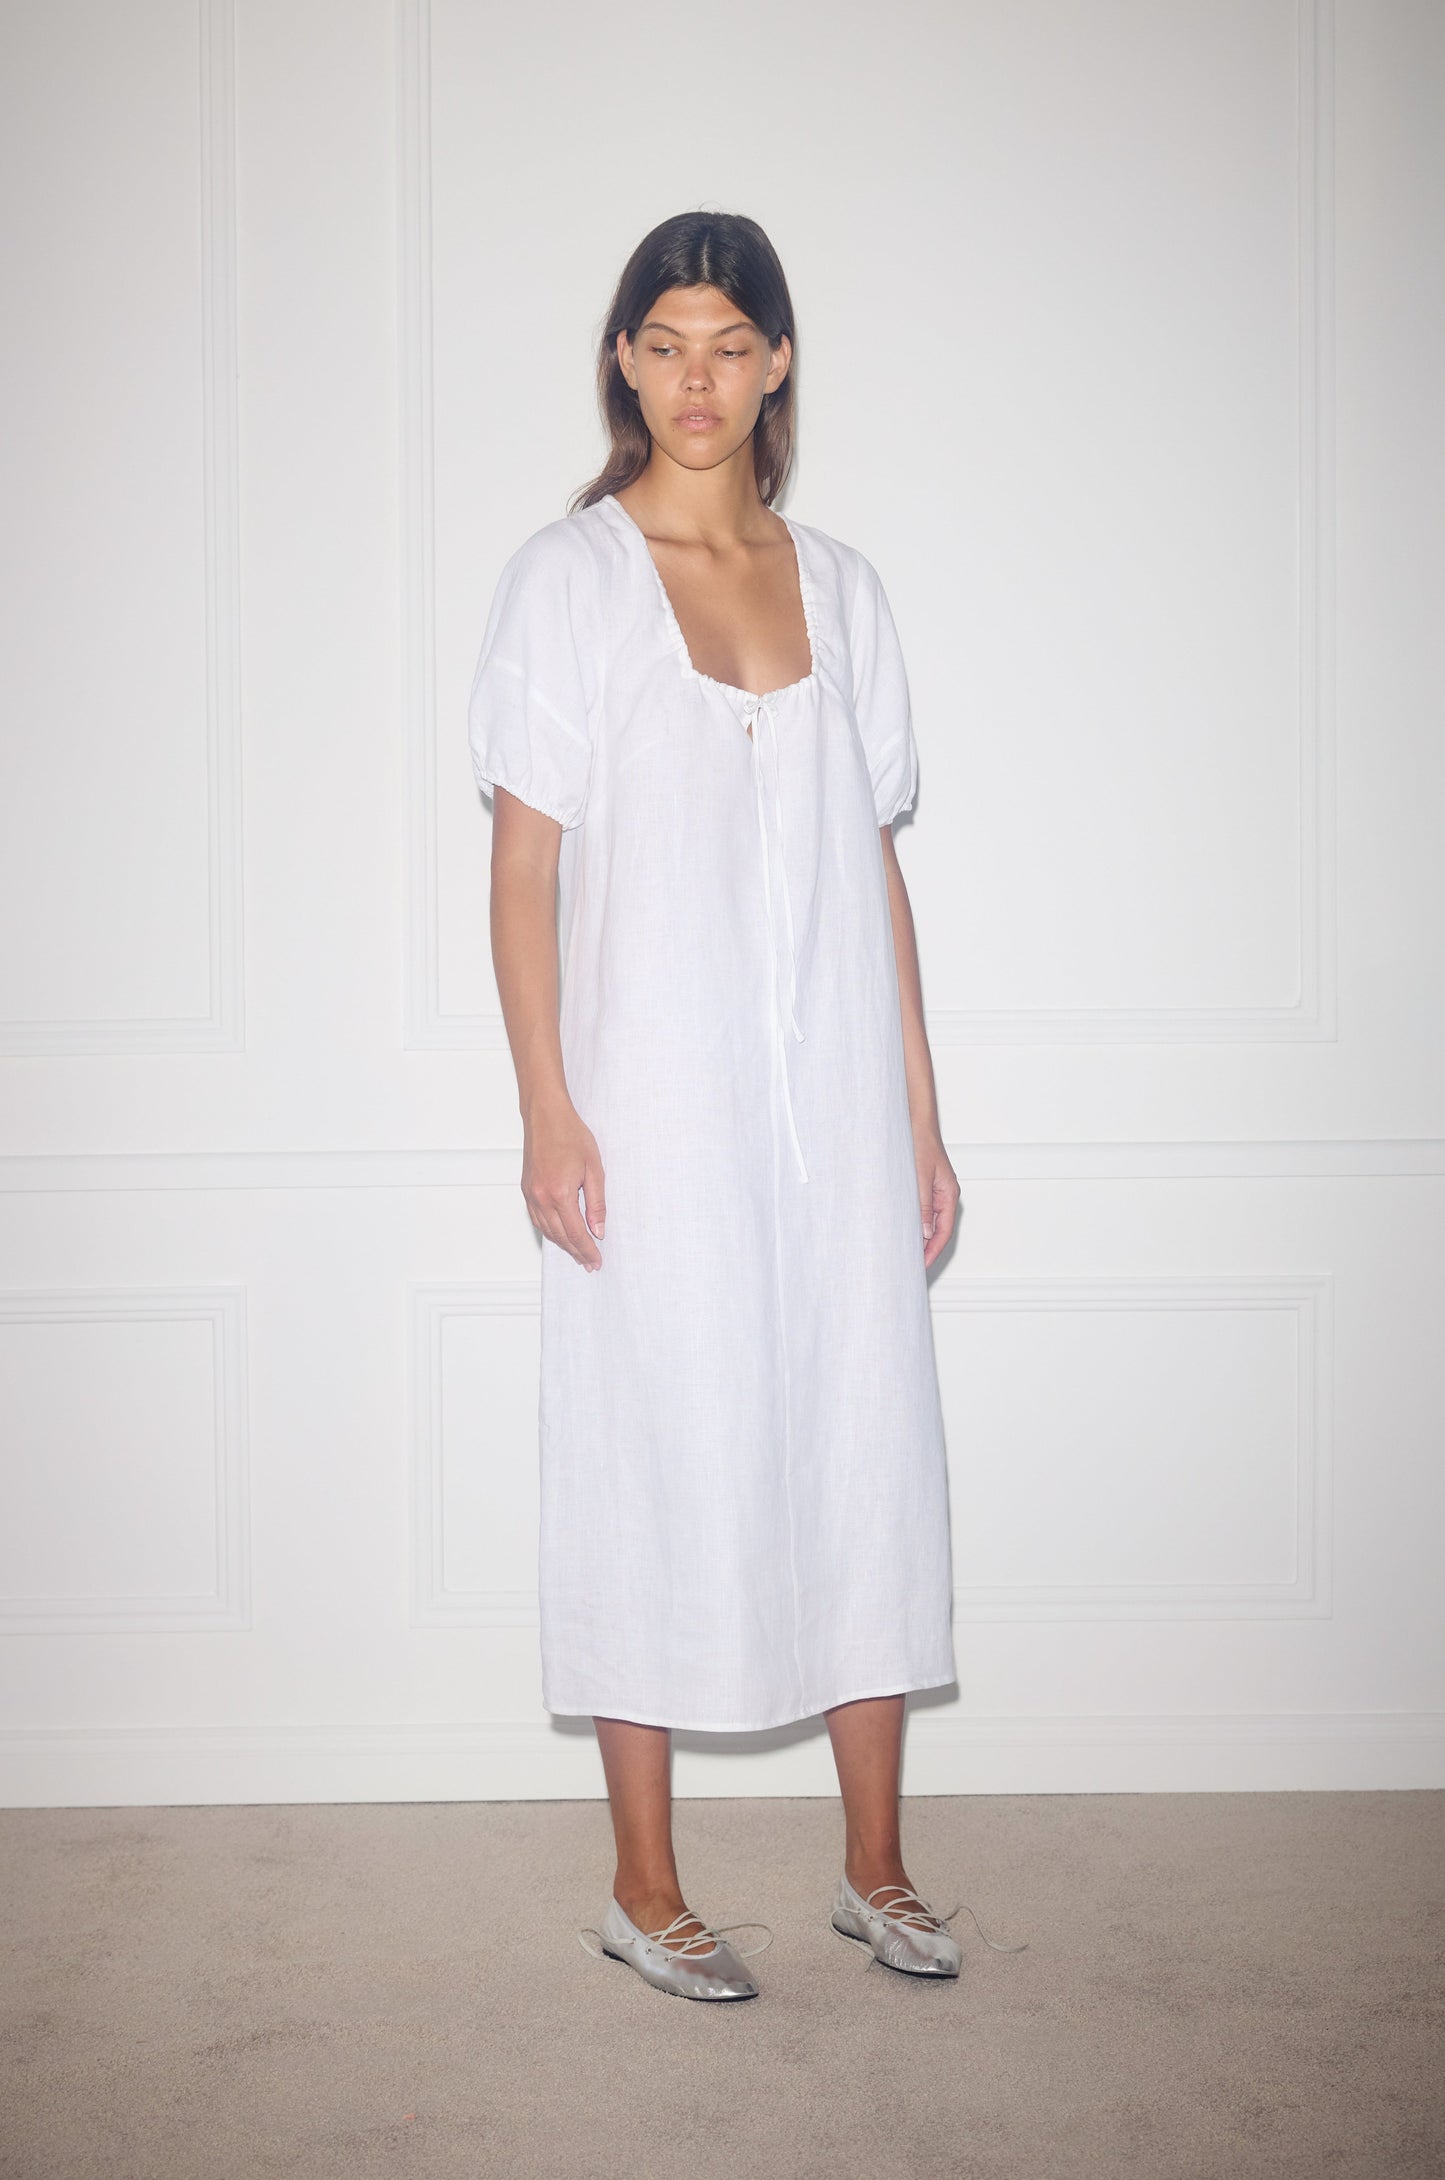 Female model wearing Curved Seam Midi Dress - White by Deiji Studios against plain background